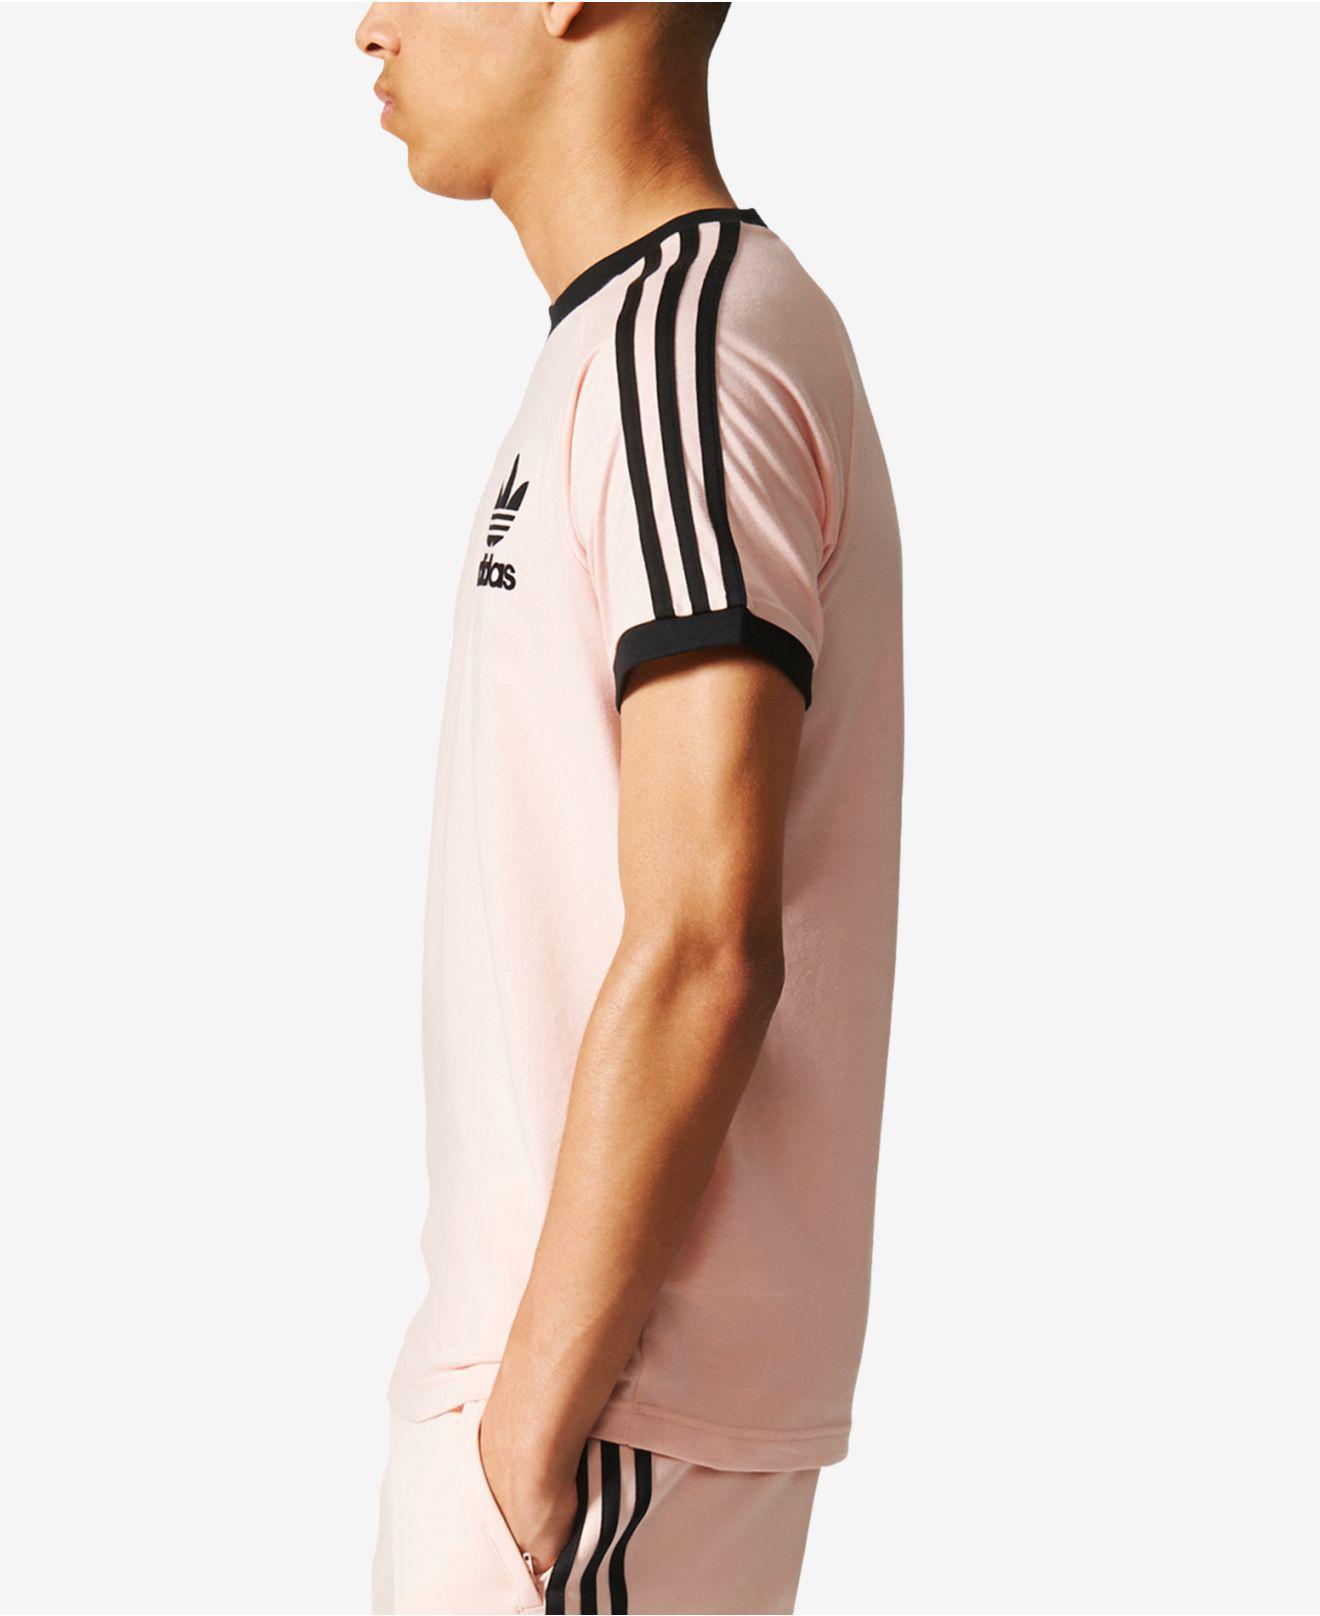 adidas Originals Cotton California T-shirt - Vapour Pink & Black for Men -  Lyst